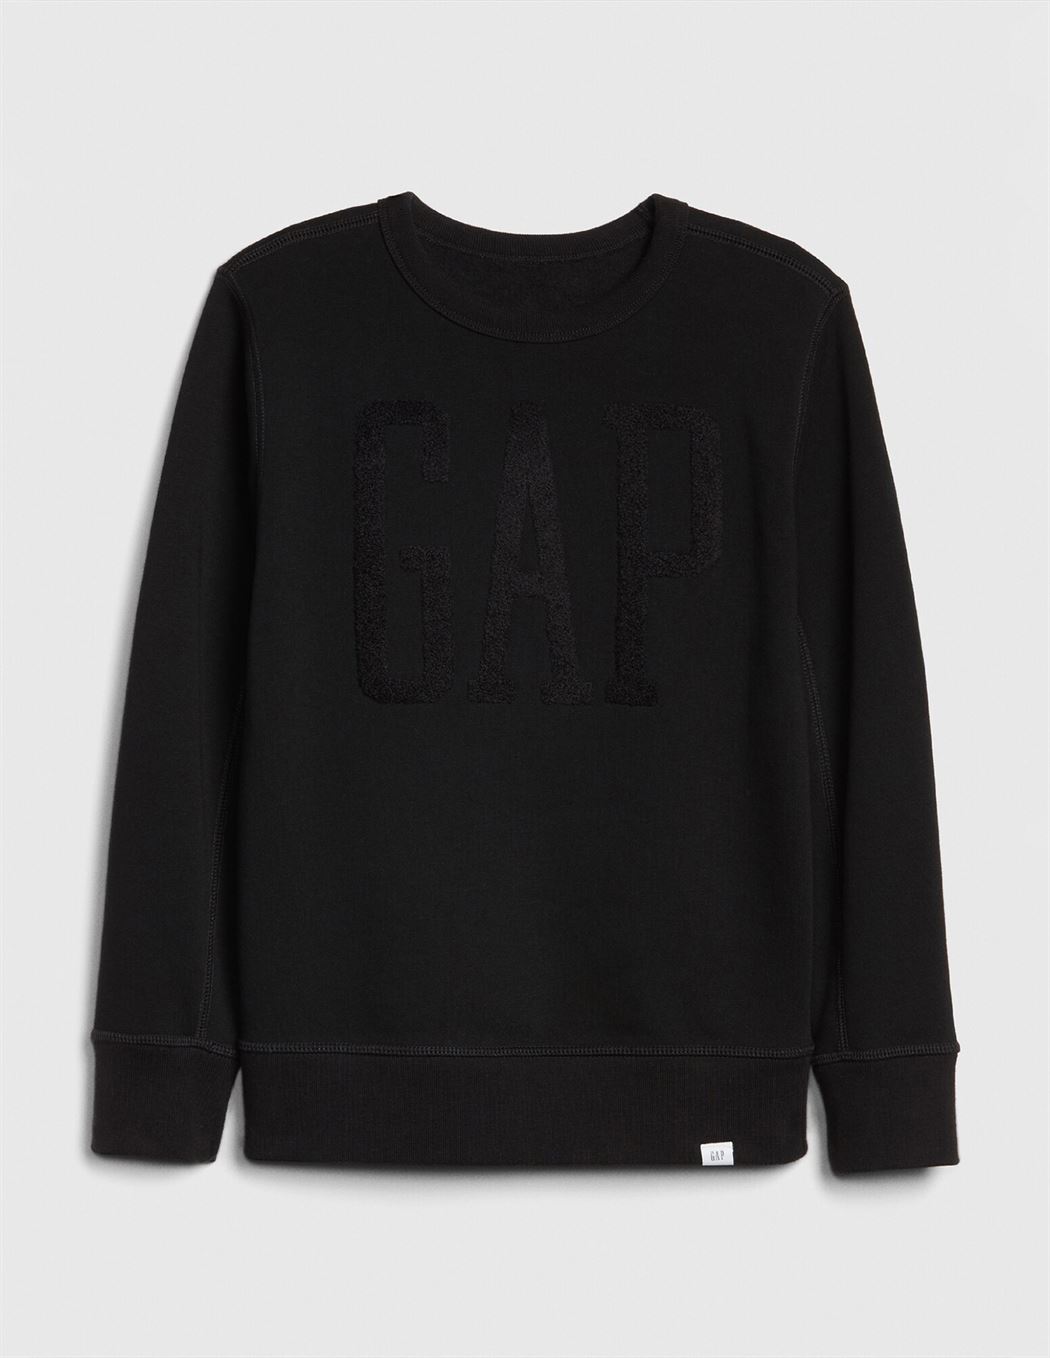 GAP Boys Black Solid Sweatshirt